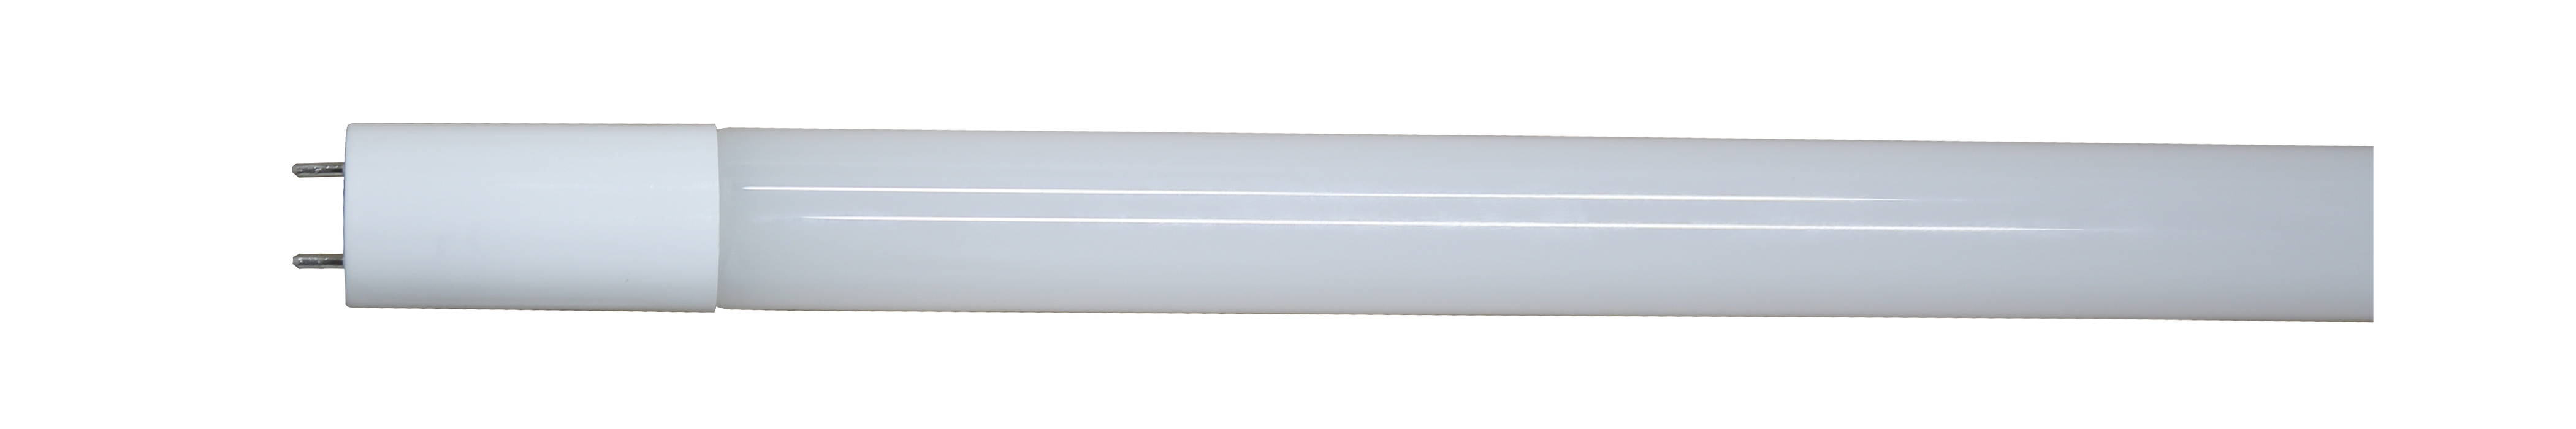 Light Efficient Design 4 Foot 18W T8 Single End Power 4000K (LED-18T8-840SE48-G3)